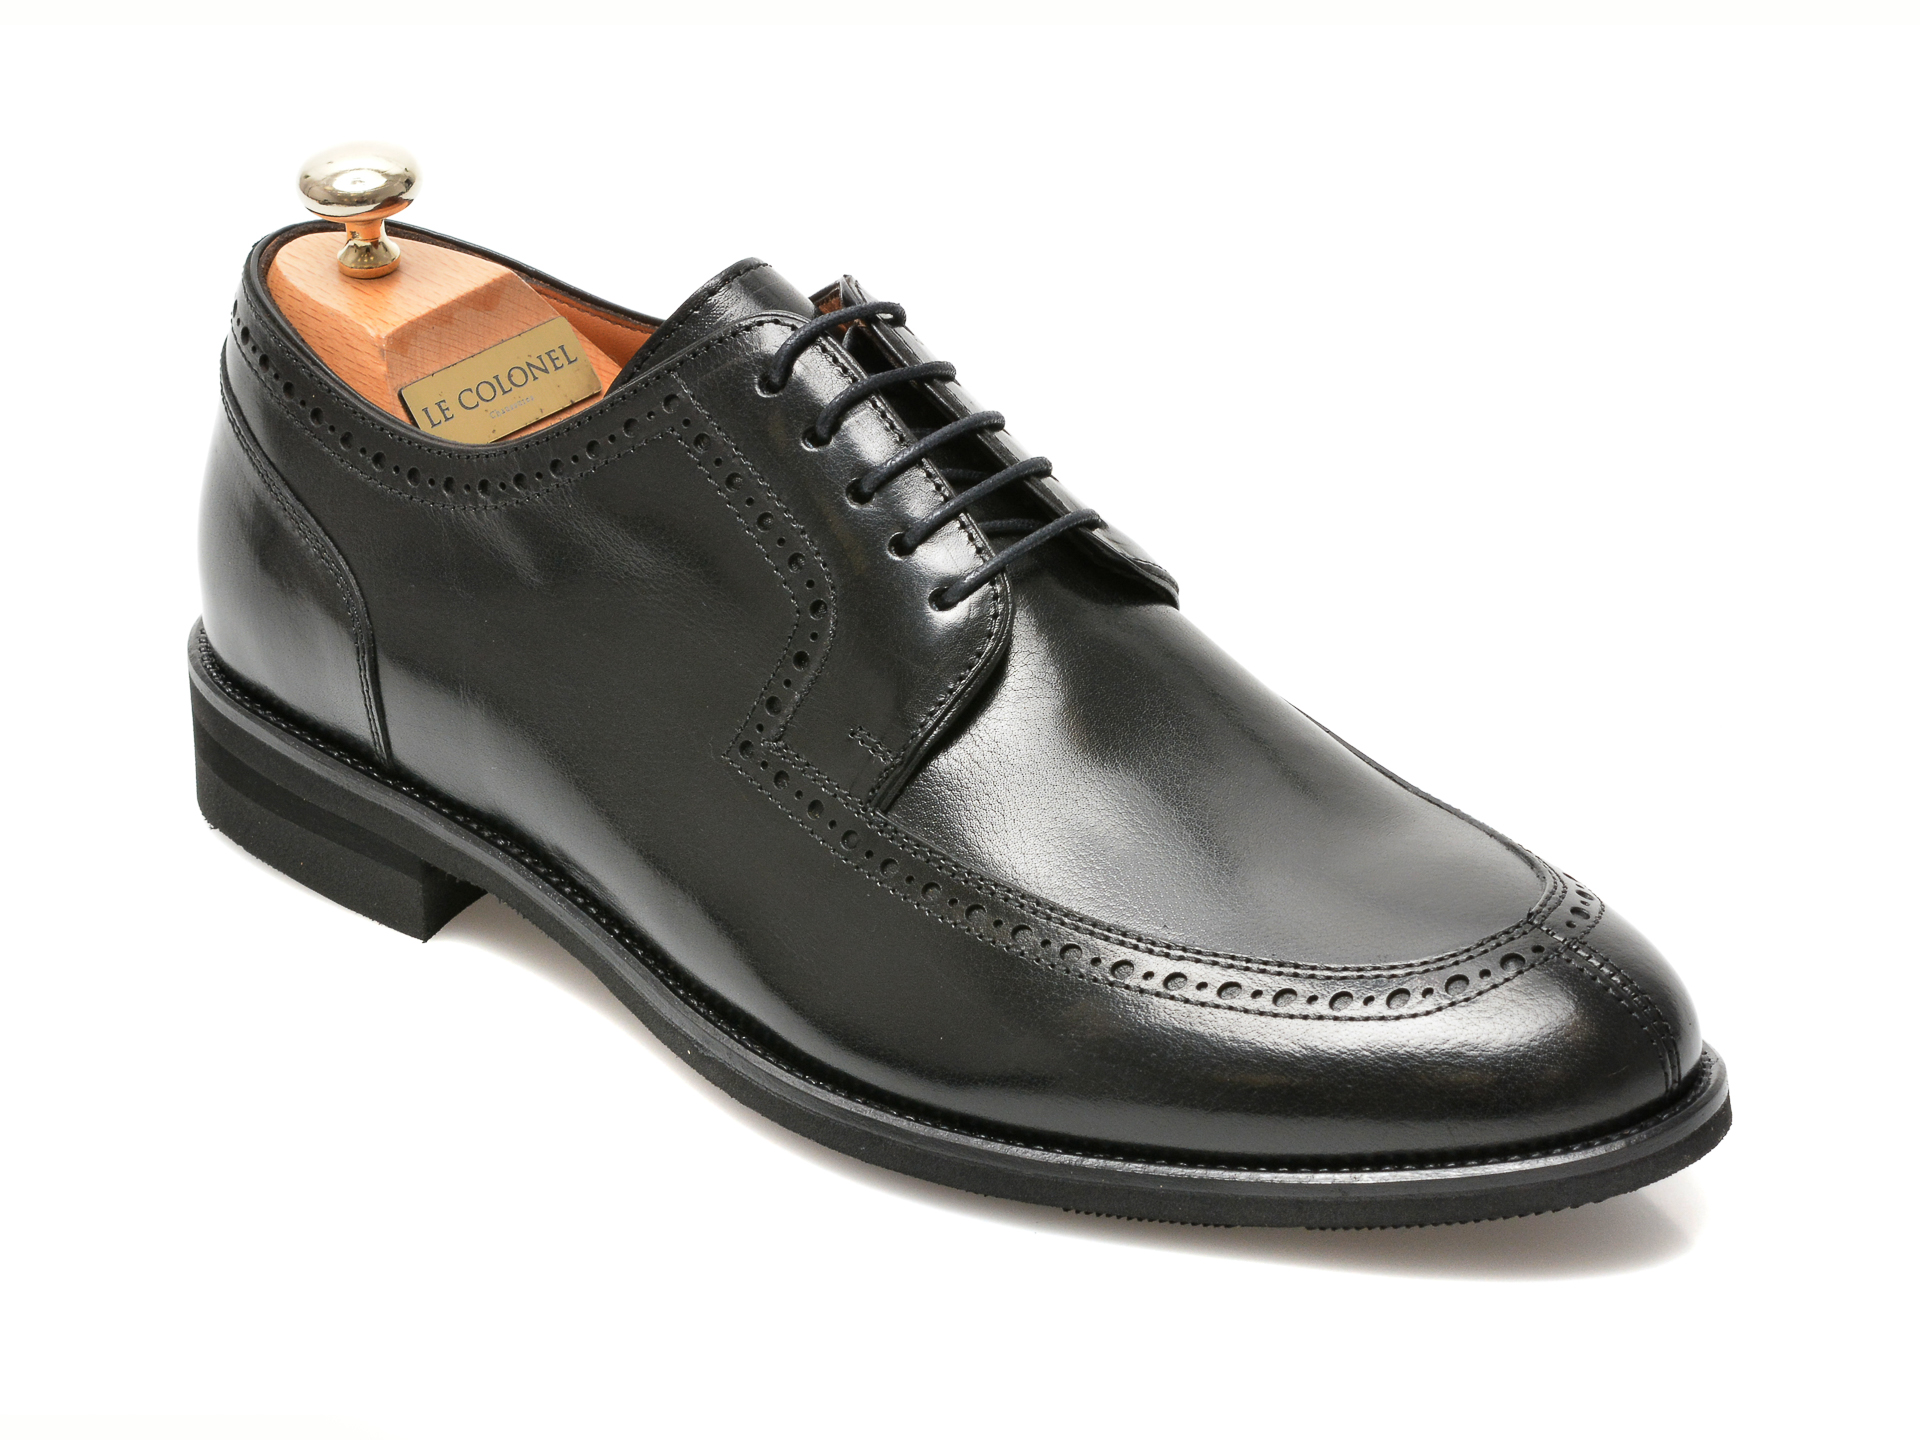 Pantofi LE COLONEL negri, 45279, din piele naturala /barbati/pantofi